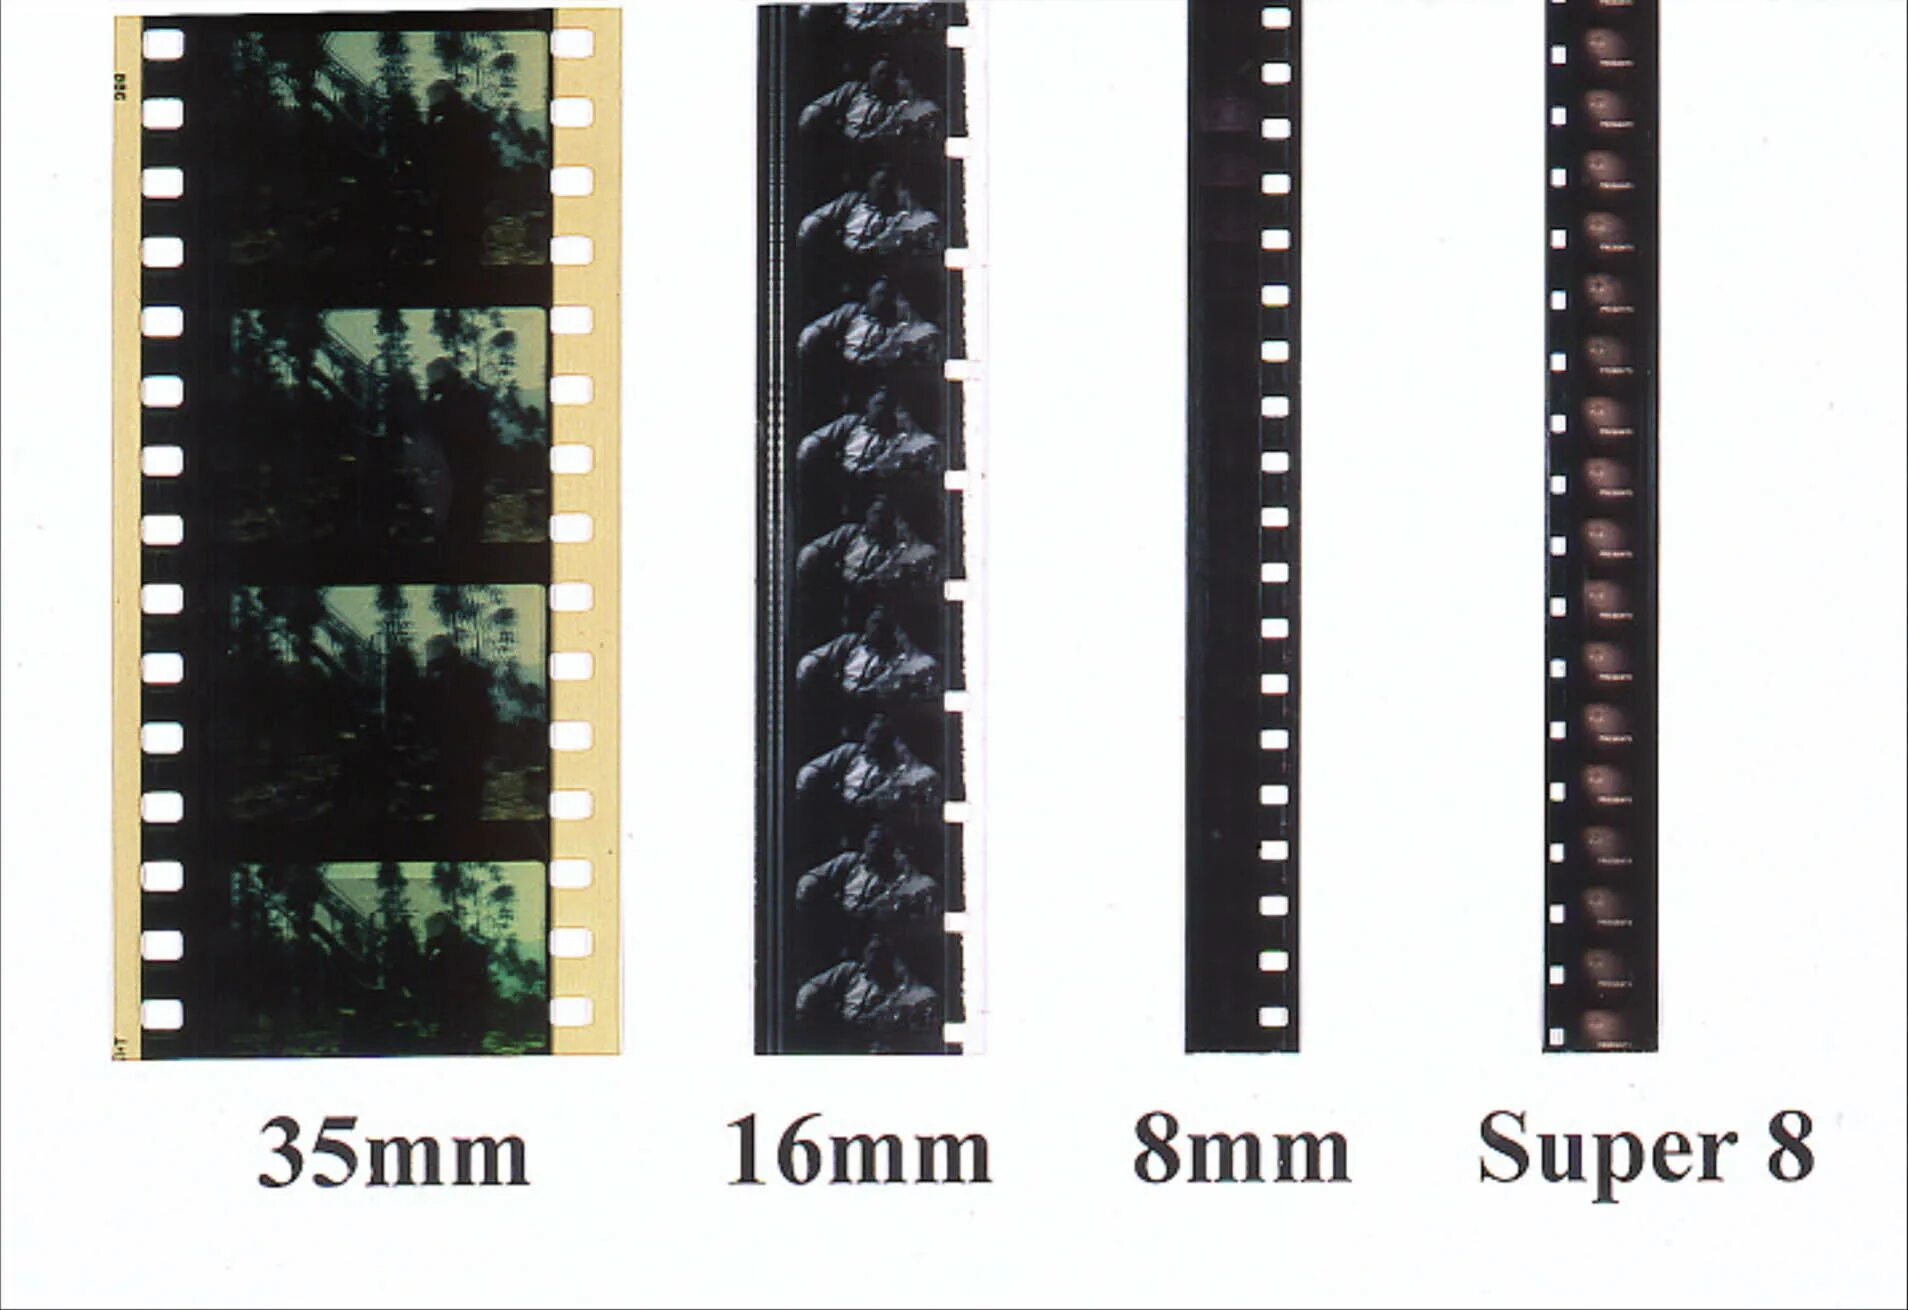 Как отличить пленку. Киноплёнка super 8 мм. Кинопленка Kodak 35mm Кадр стандарт перфорации. Размер кадра 8 мм кинопленки. 35-Мм киноплёнка.